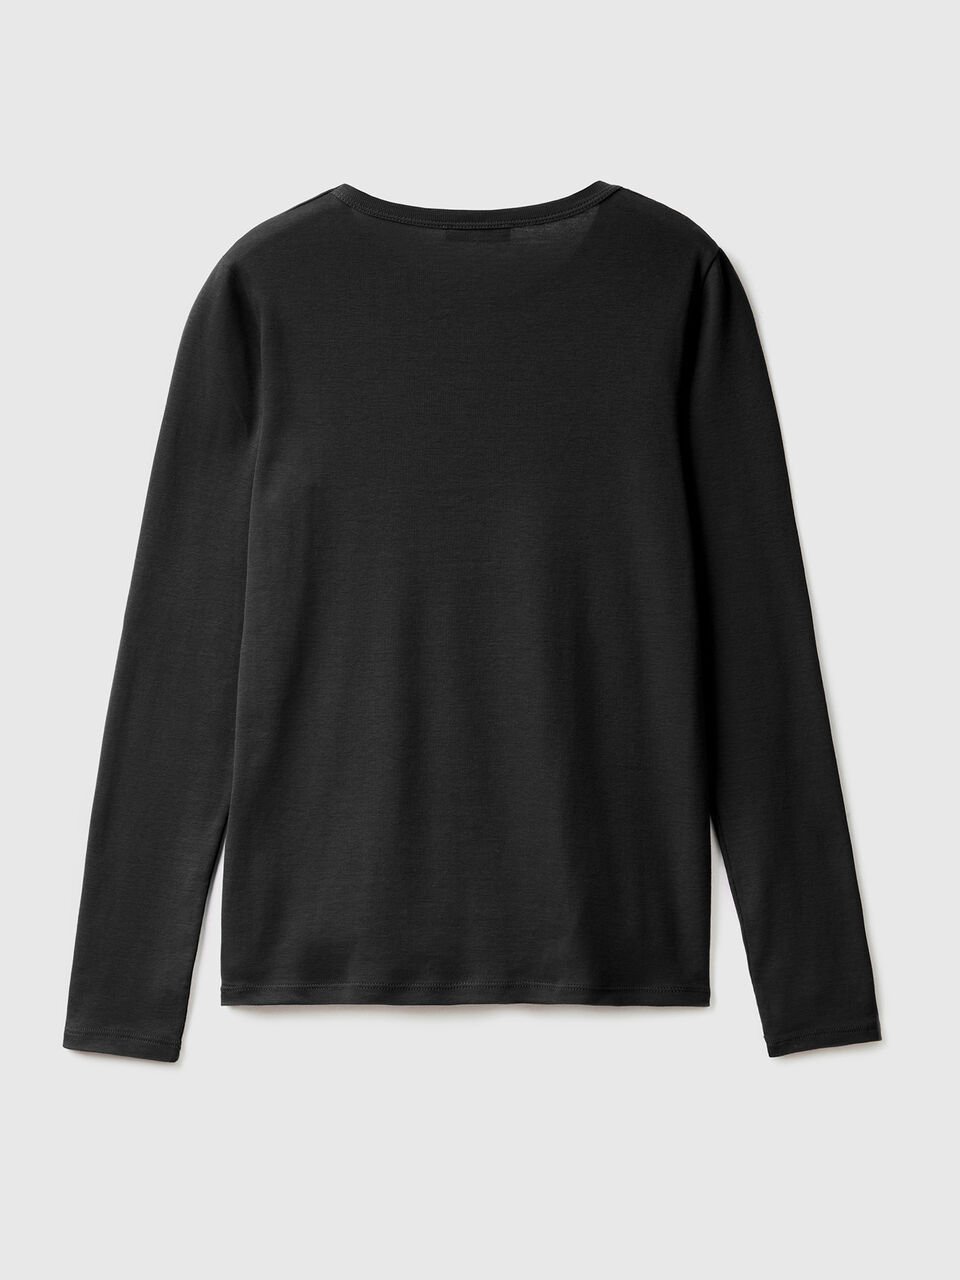 Black 100% cotton long sleeve t-shirt - Black | Benetton